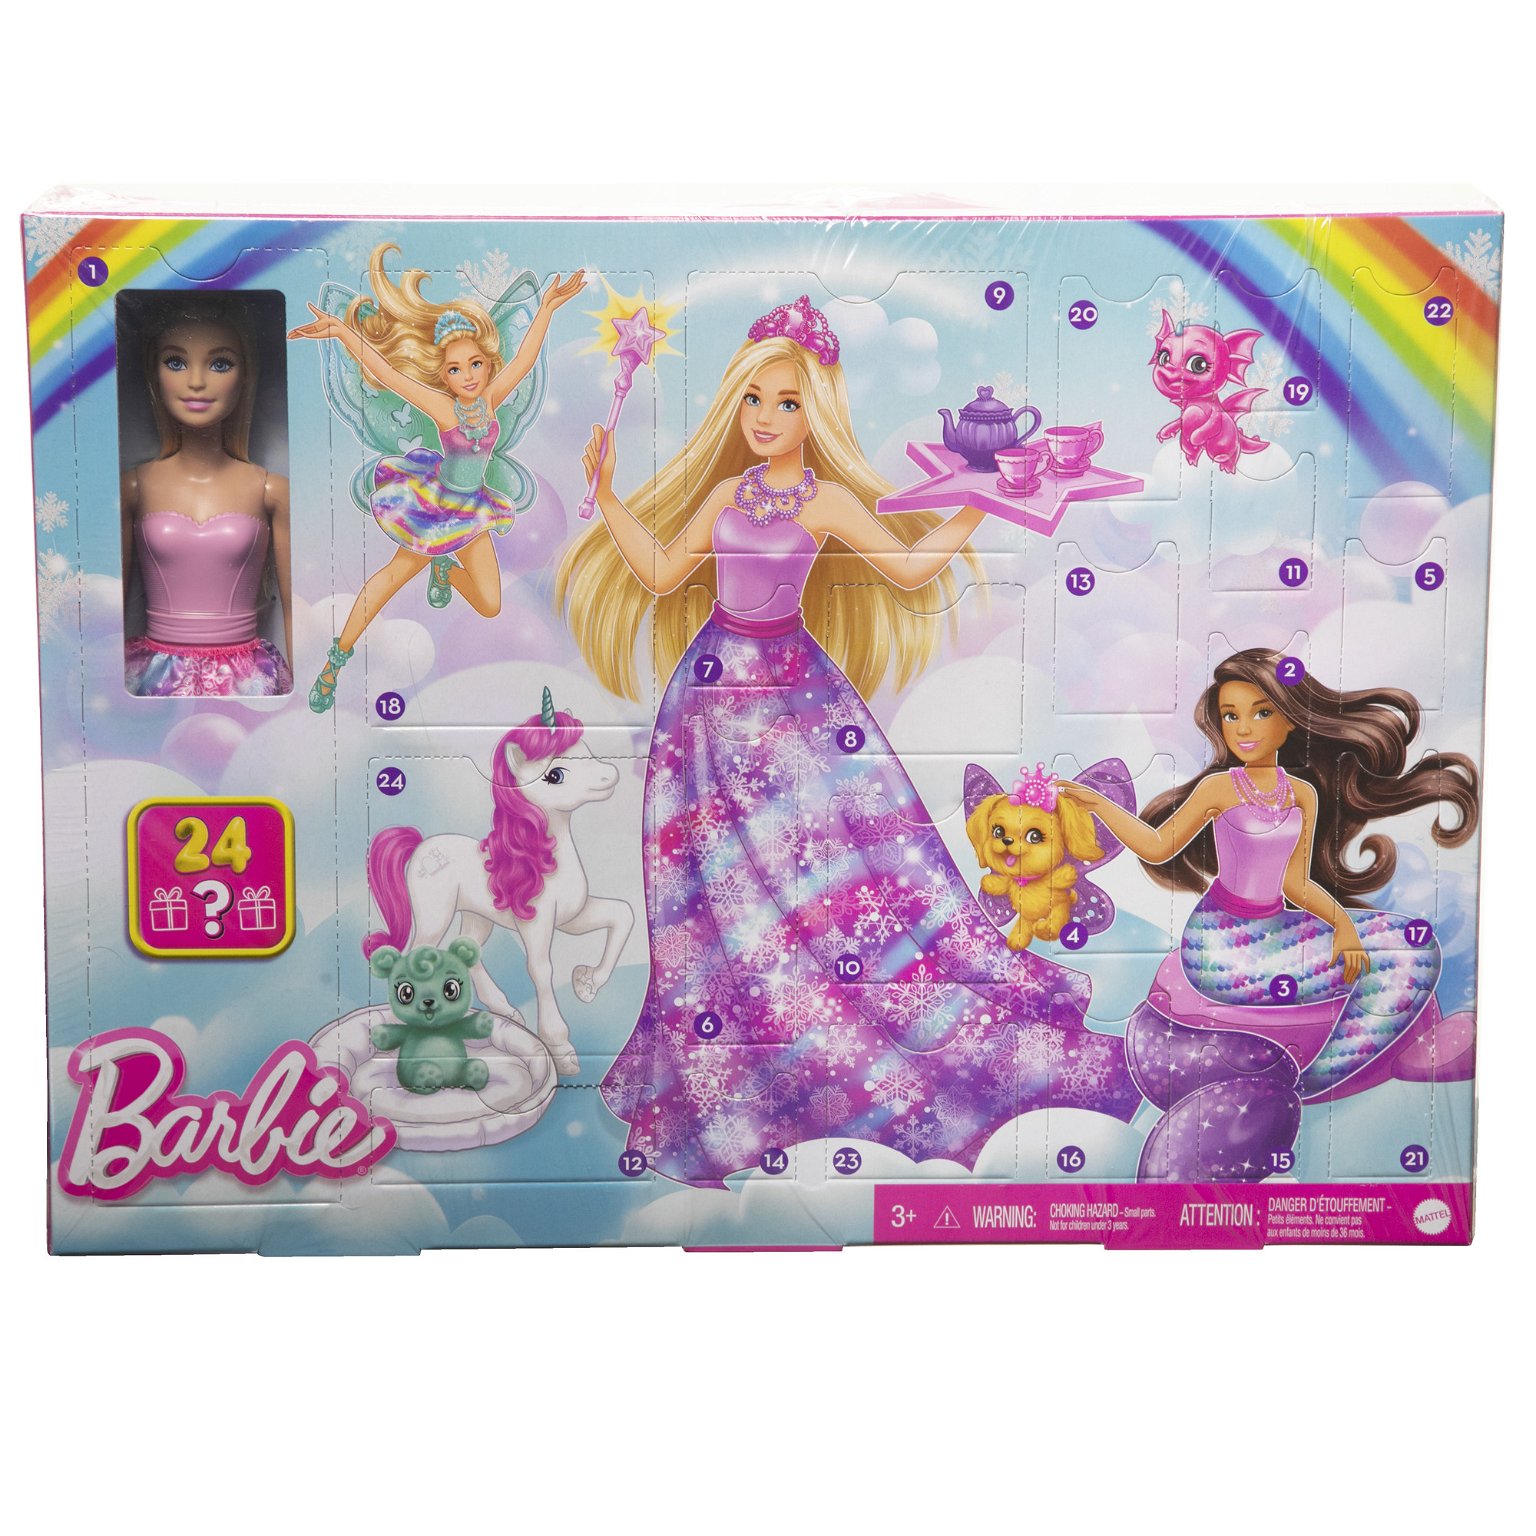 Barbie Dreamtopia advento kalendorius - 1